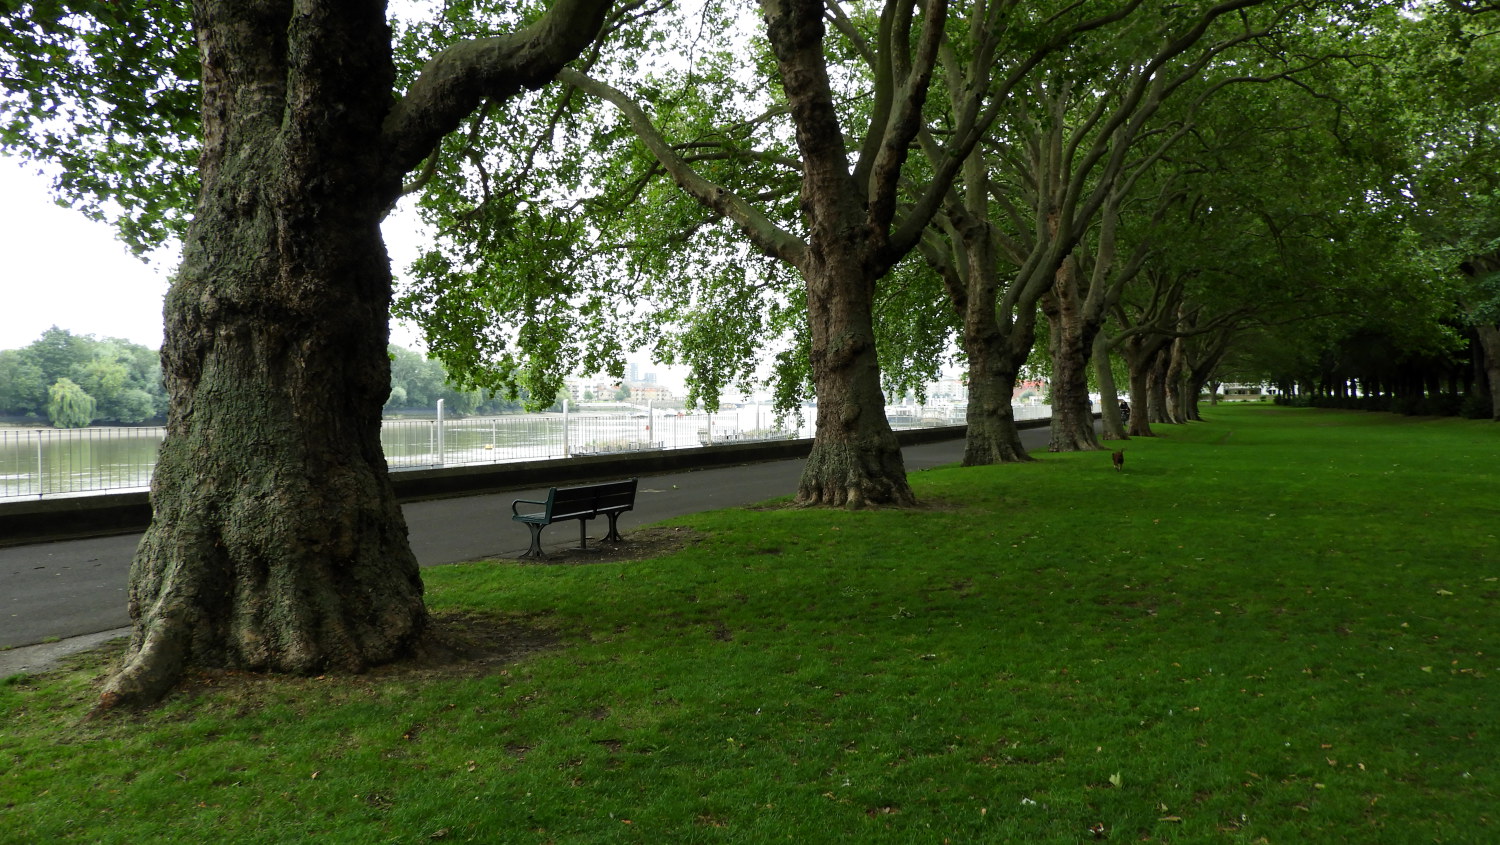 Wandsworth Park